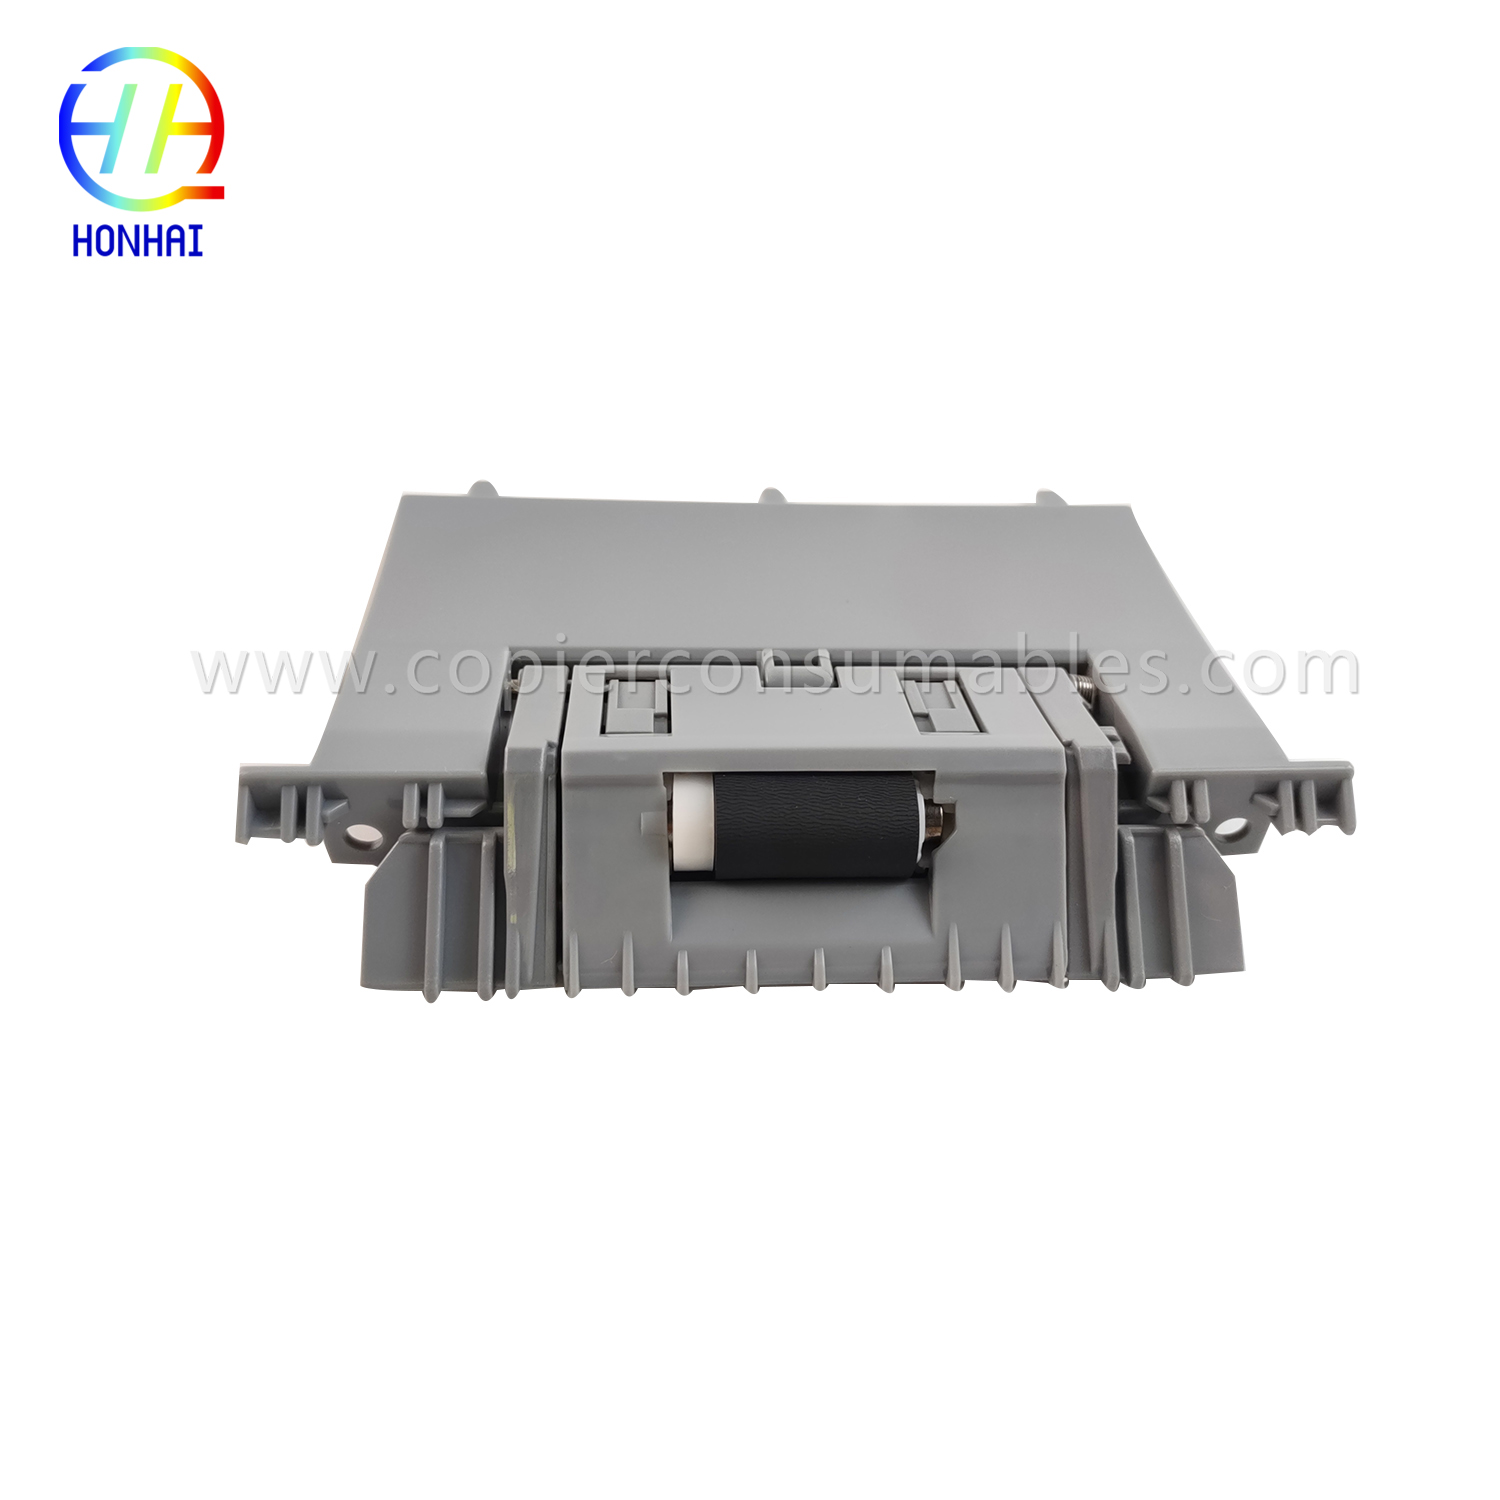 کاست مونتاژ غلتکی جداسازی HP LaserJet Enterprise 500 Color M551dn RM18129000CN RM1-8129-000CN OEM